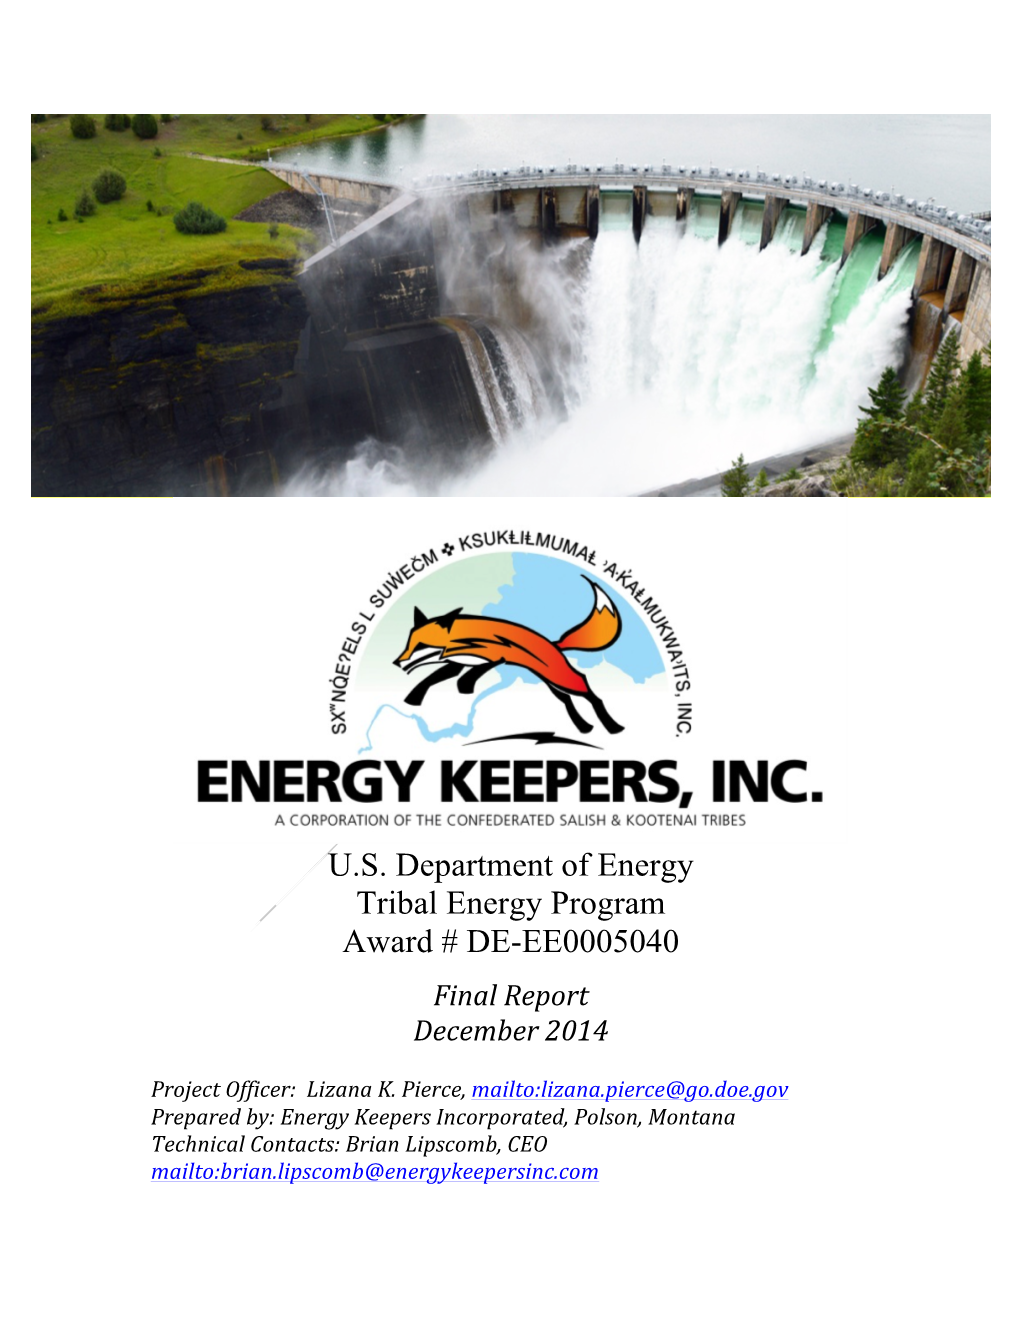 Energy Keepers, Inc